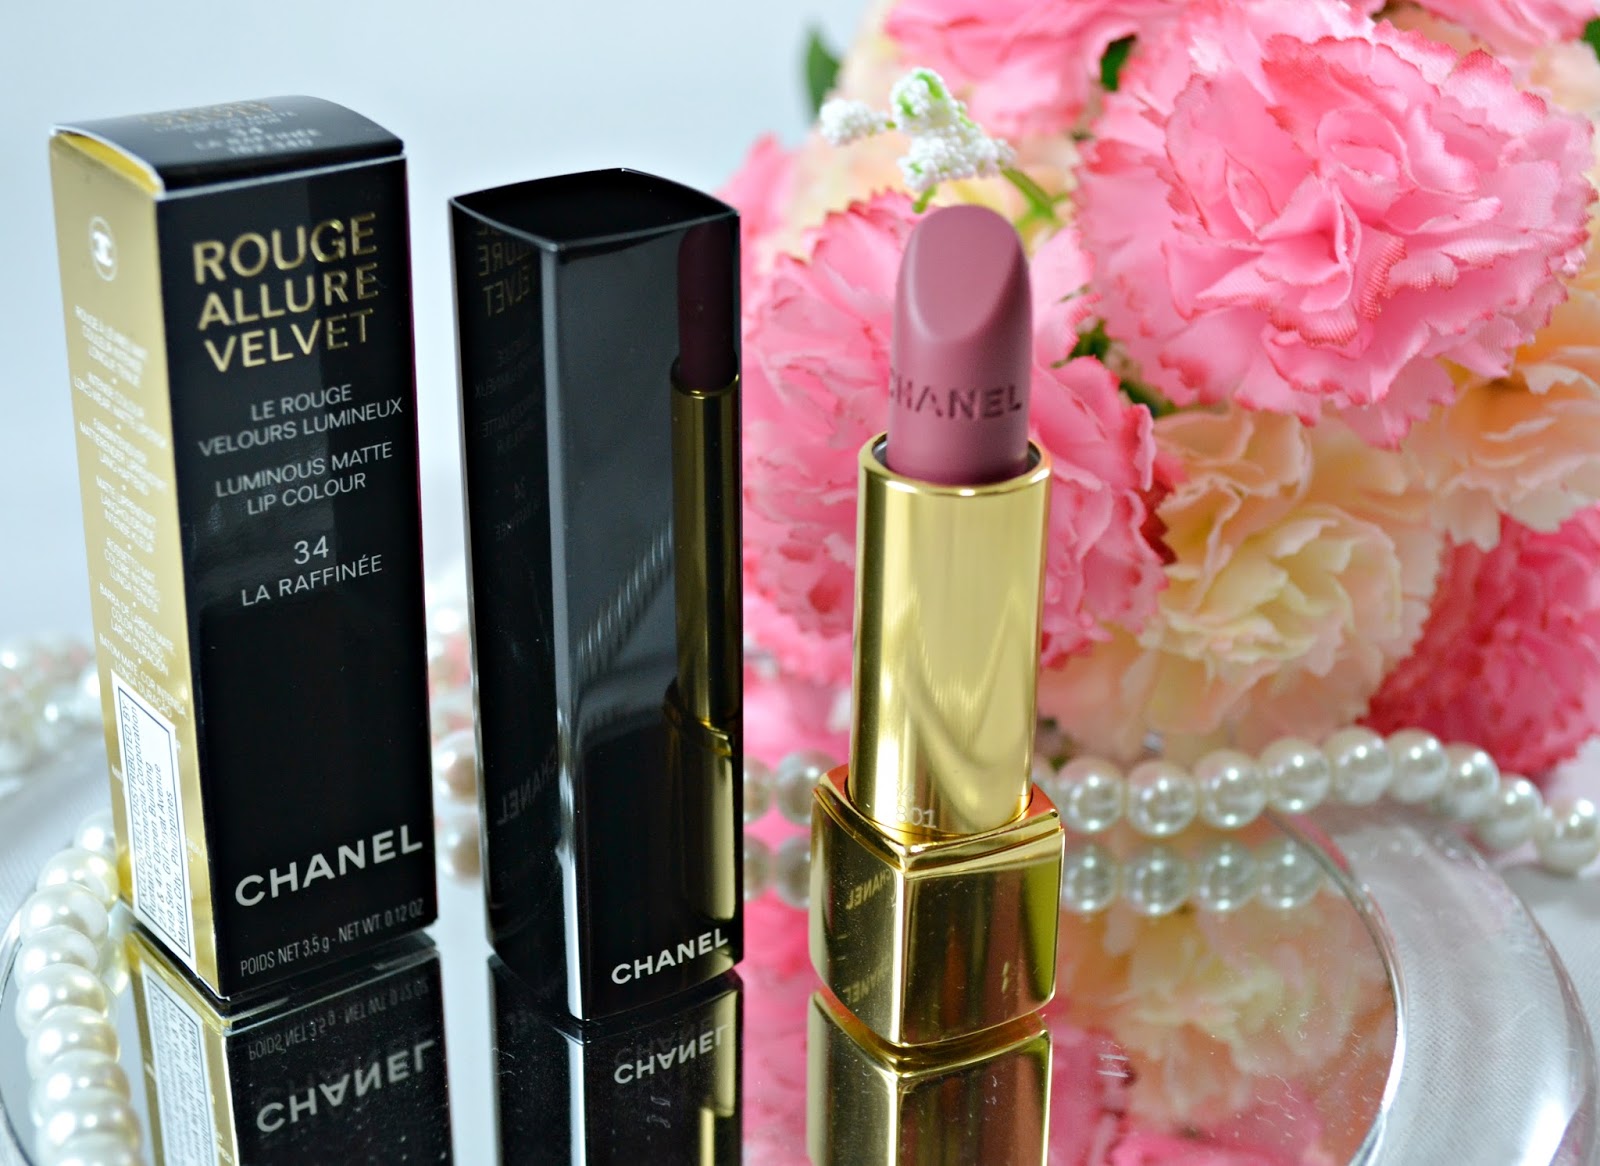 Chanel Rouge Allure Velvet: 34 La Raffinee | All About Beauty 101